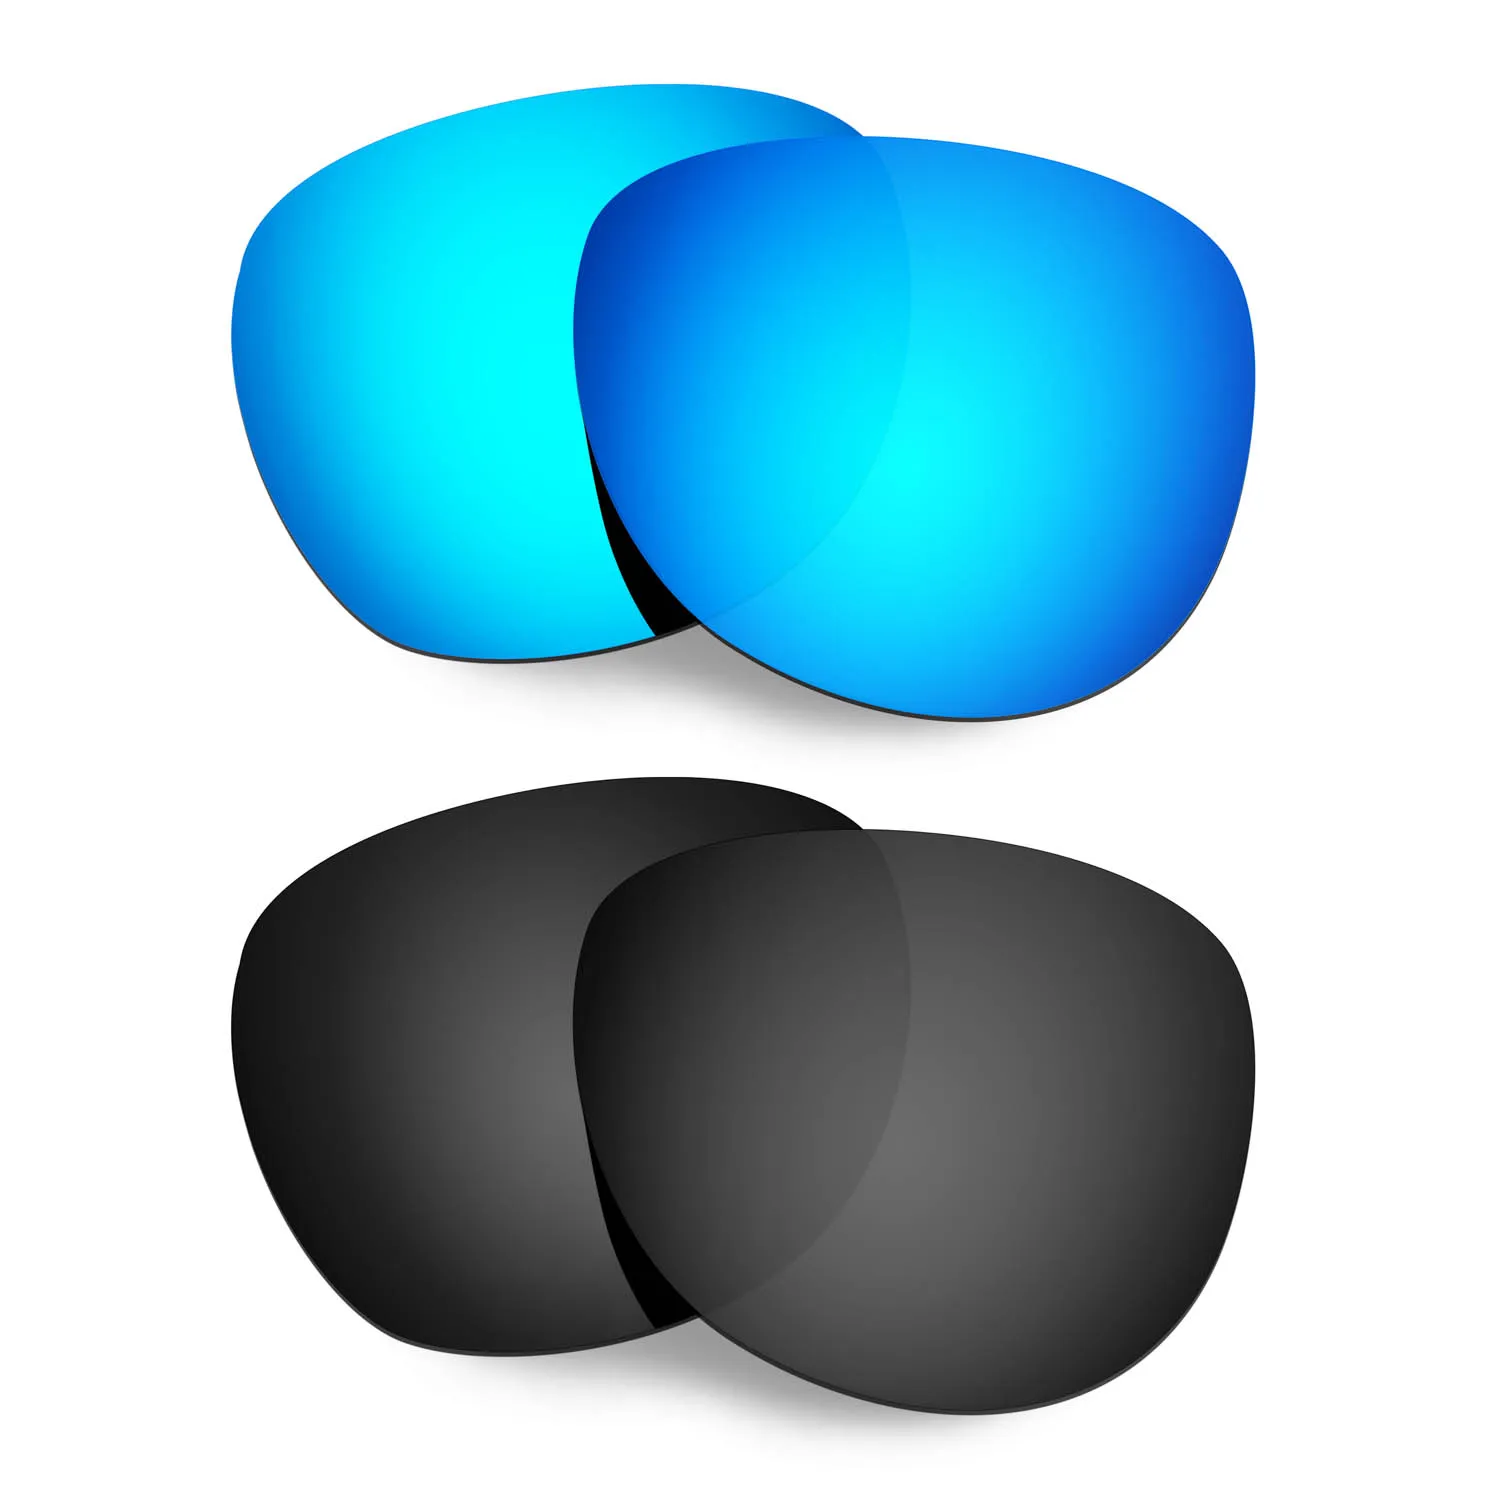 

HKUCO Polarized Replacement Lenses For Stringer Sunglasses Blue/Black 2 Pairs